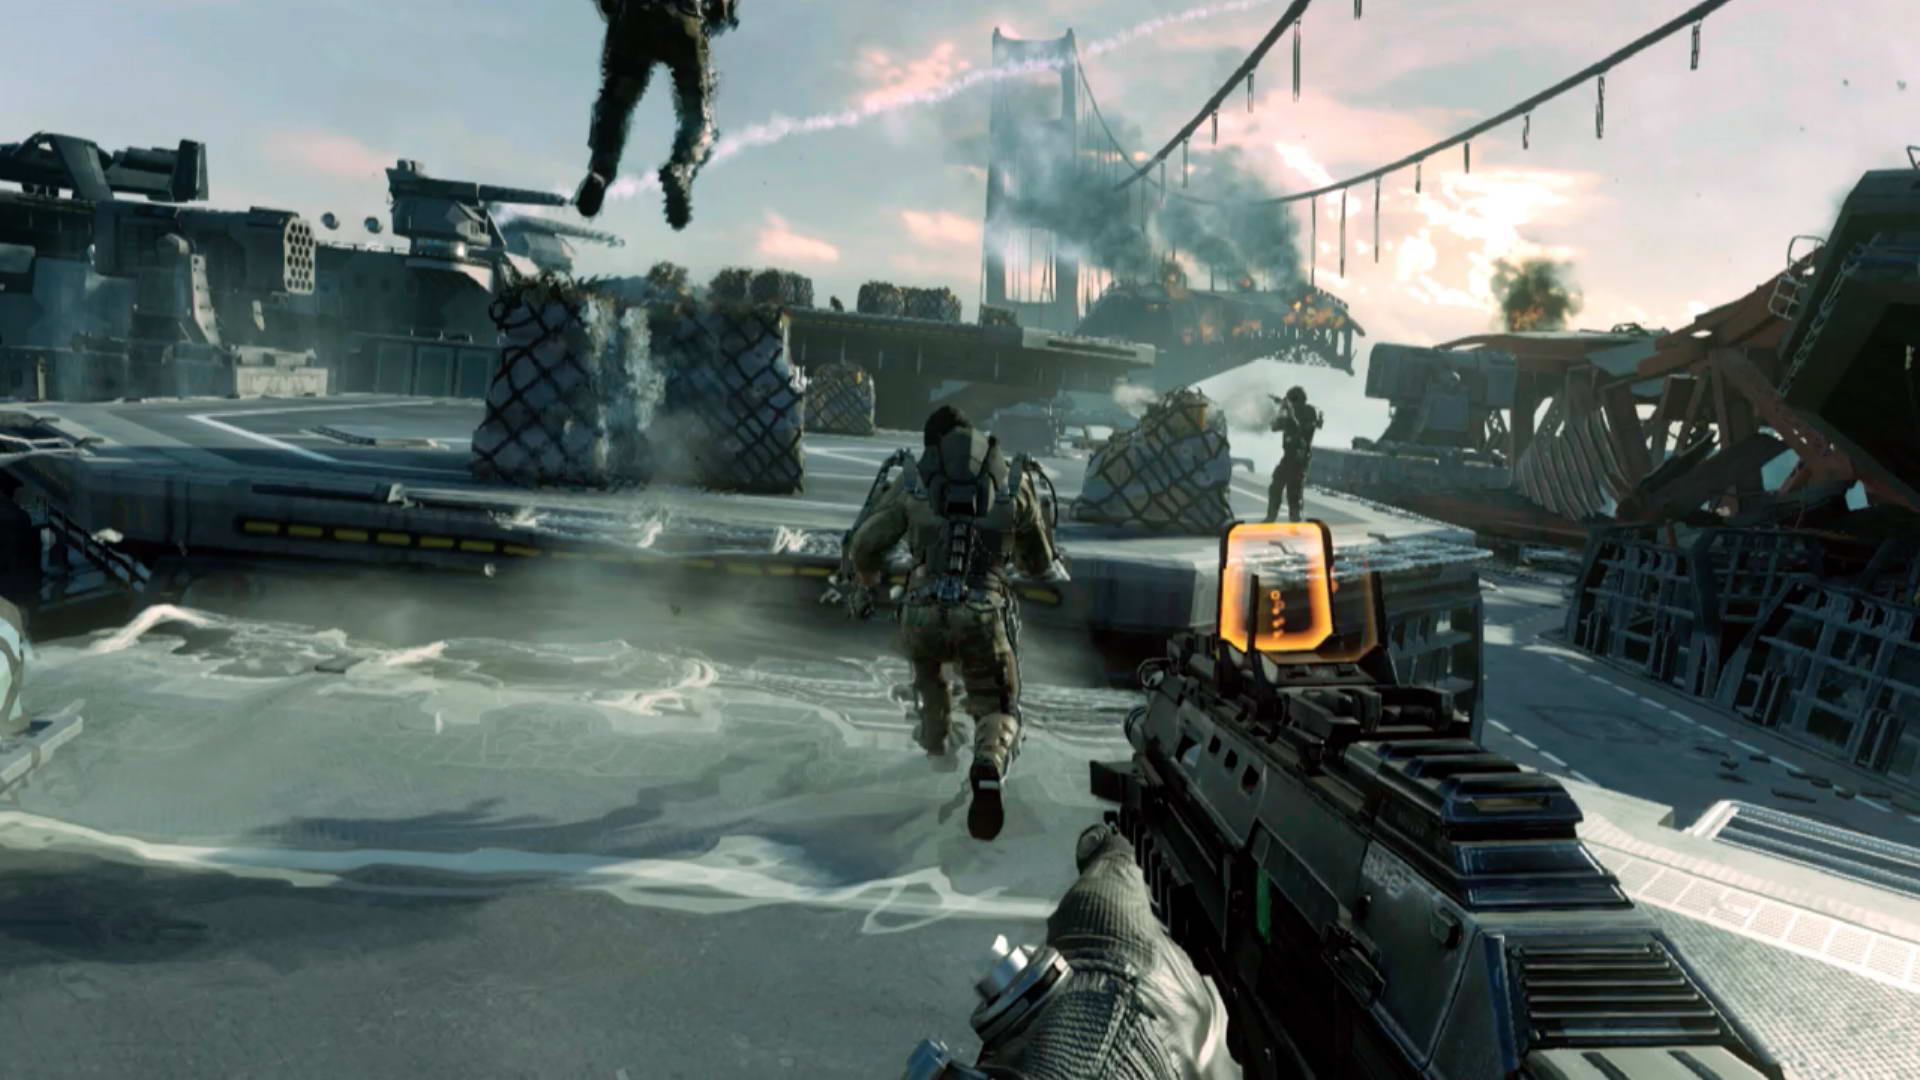 Скриншот *Call of Duty: Advanced Warfare [PS4] 5.05 / 6.72 / 7.02 [EUR] (2014) [Русский] (v1.23)*